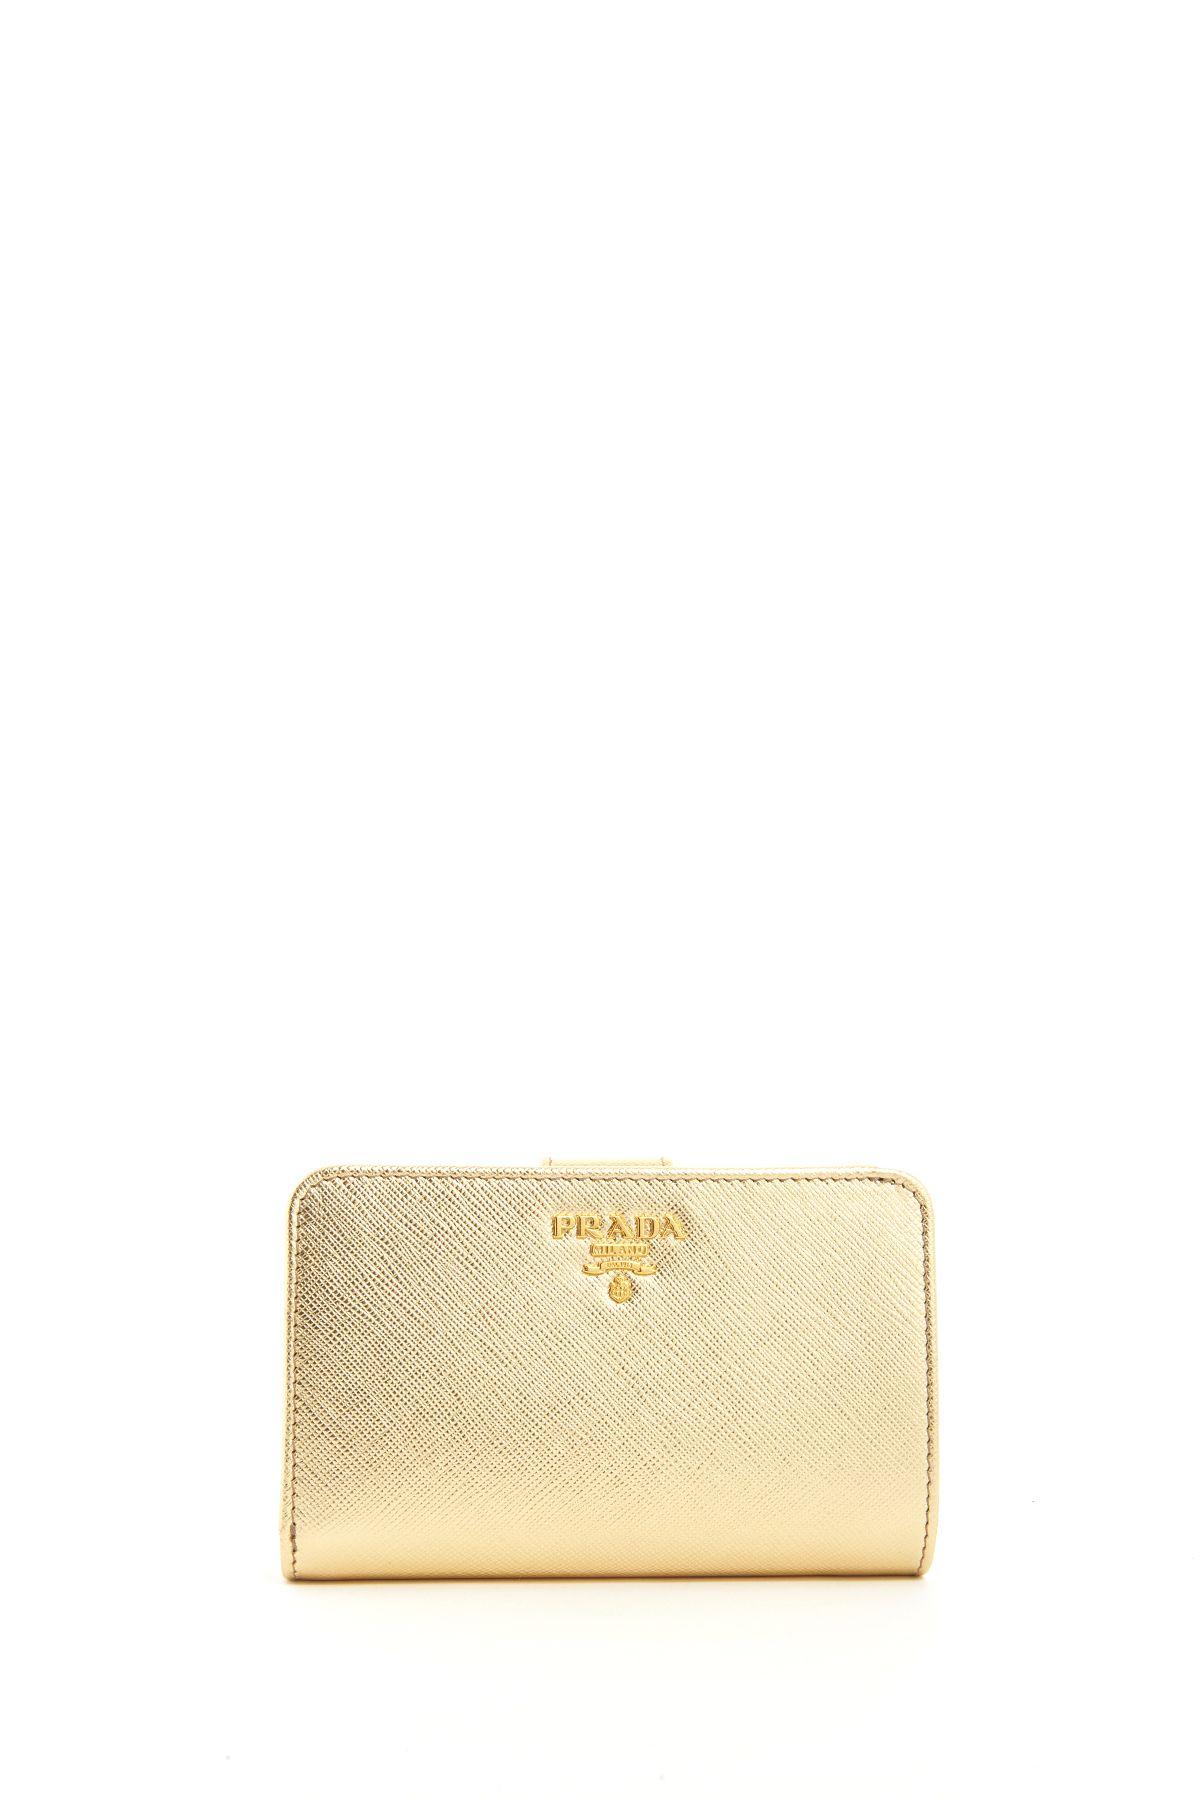 Prada Wallet In Gold | ModeSens